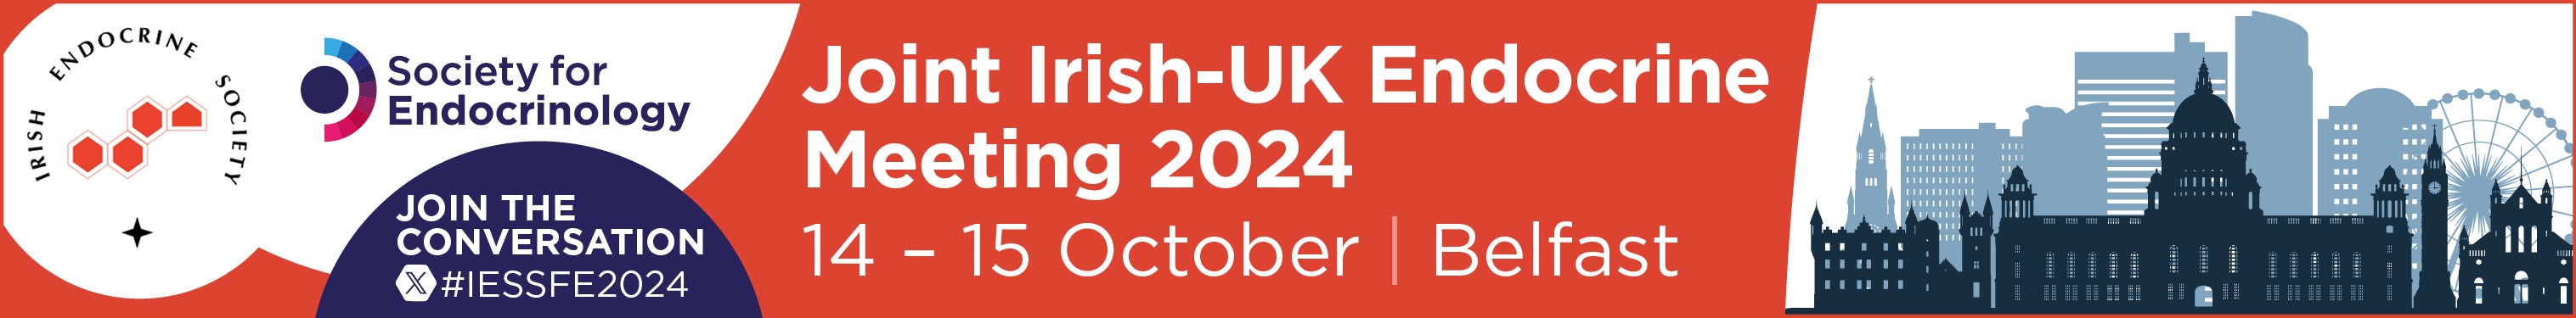 Joint Irish-UK Endocrine Meeting 2024